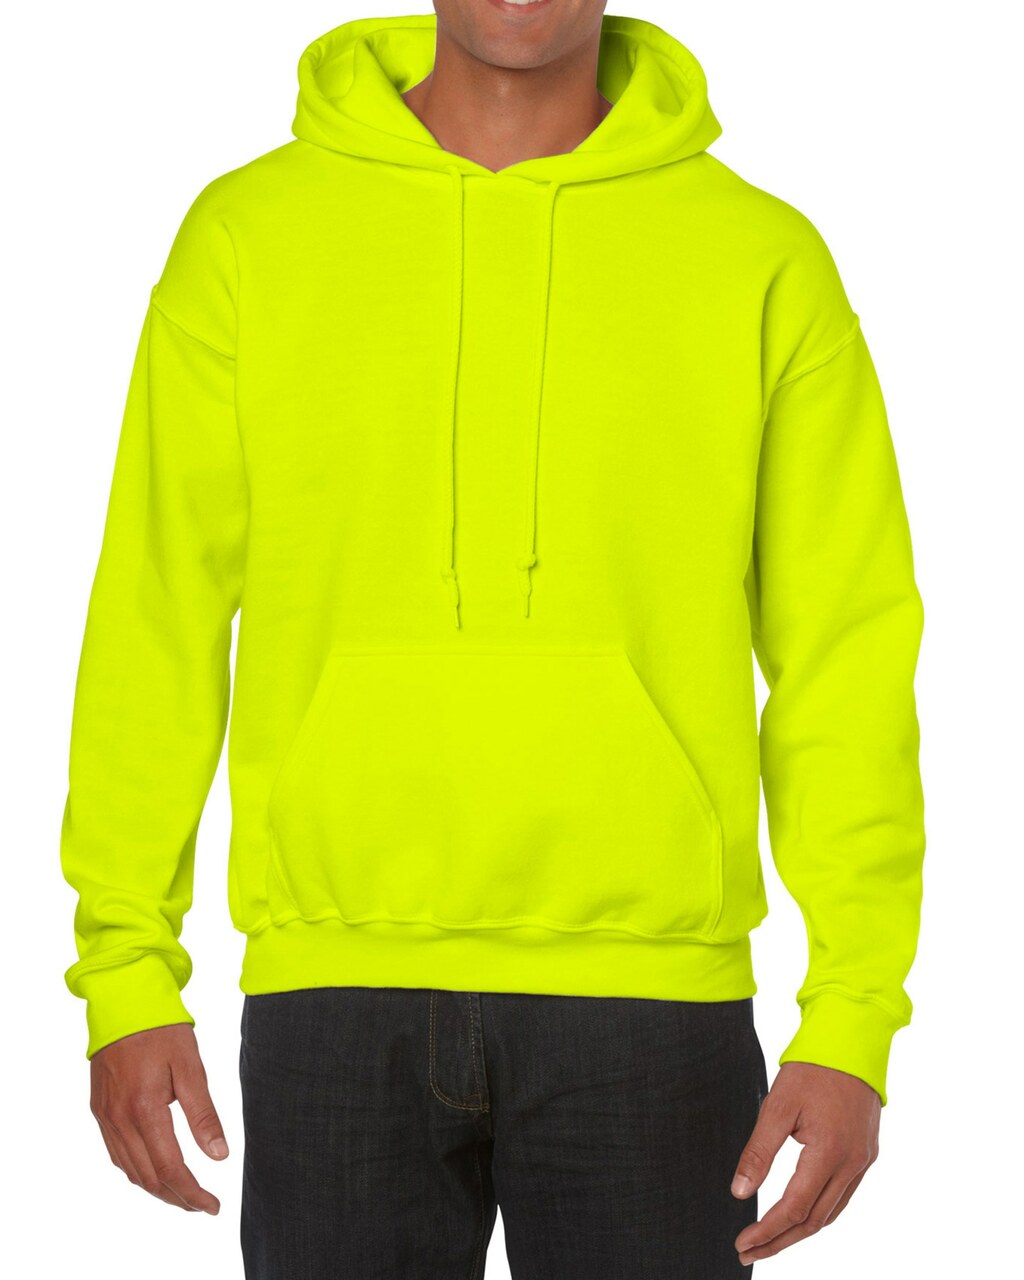 Small, Gildan, Dry-Blend 9.3oz. Classic Fit Hooded Sweatshirt [12500]